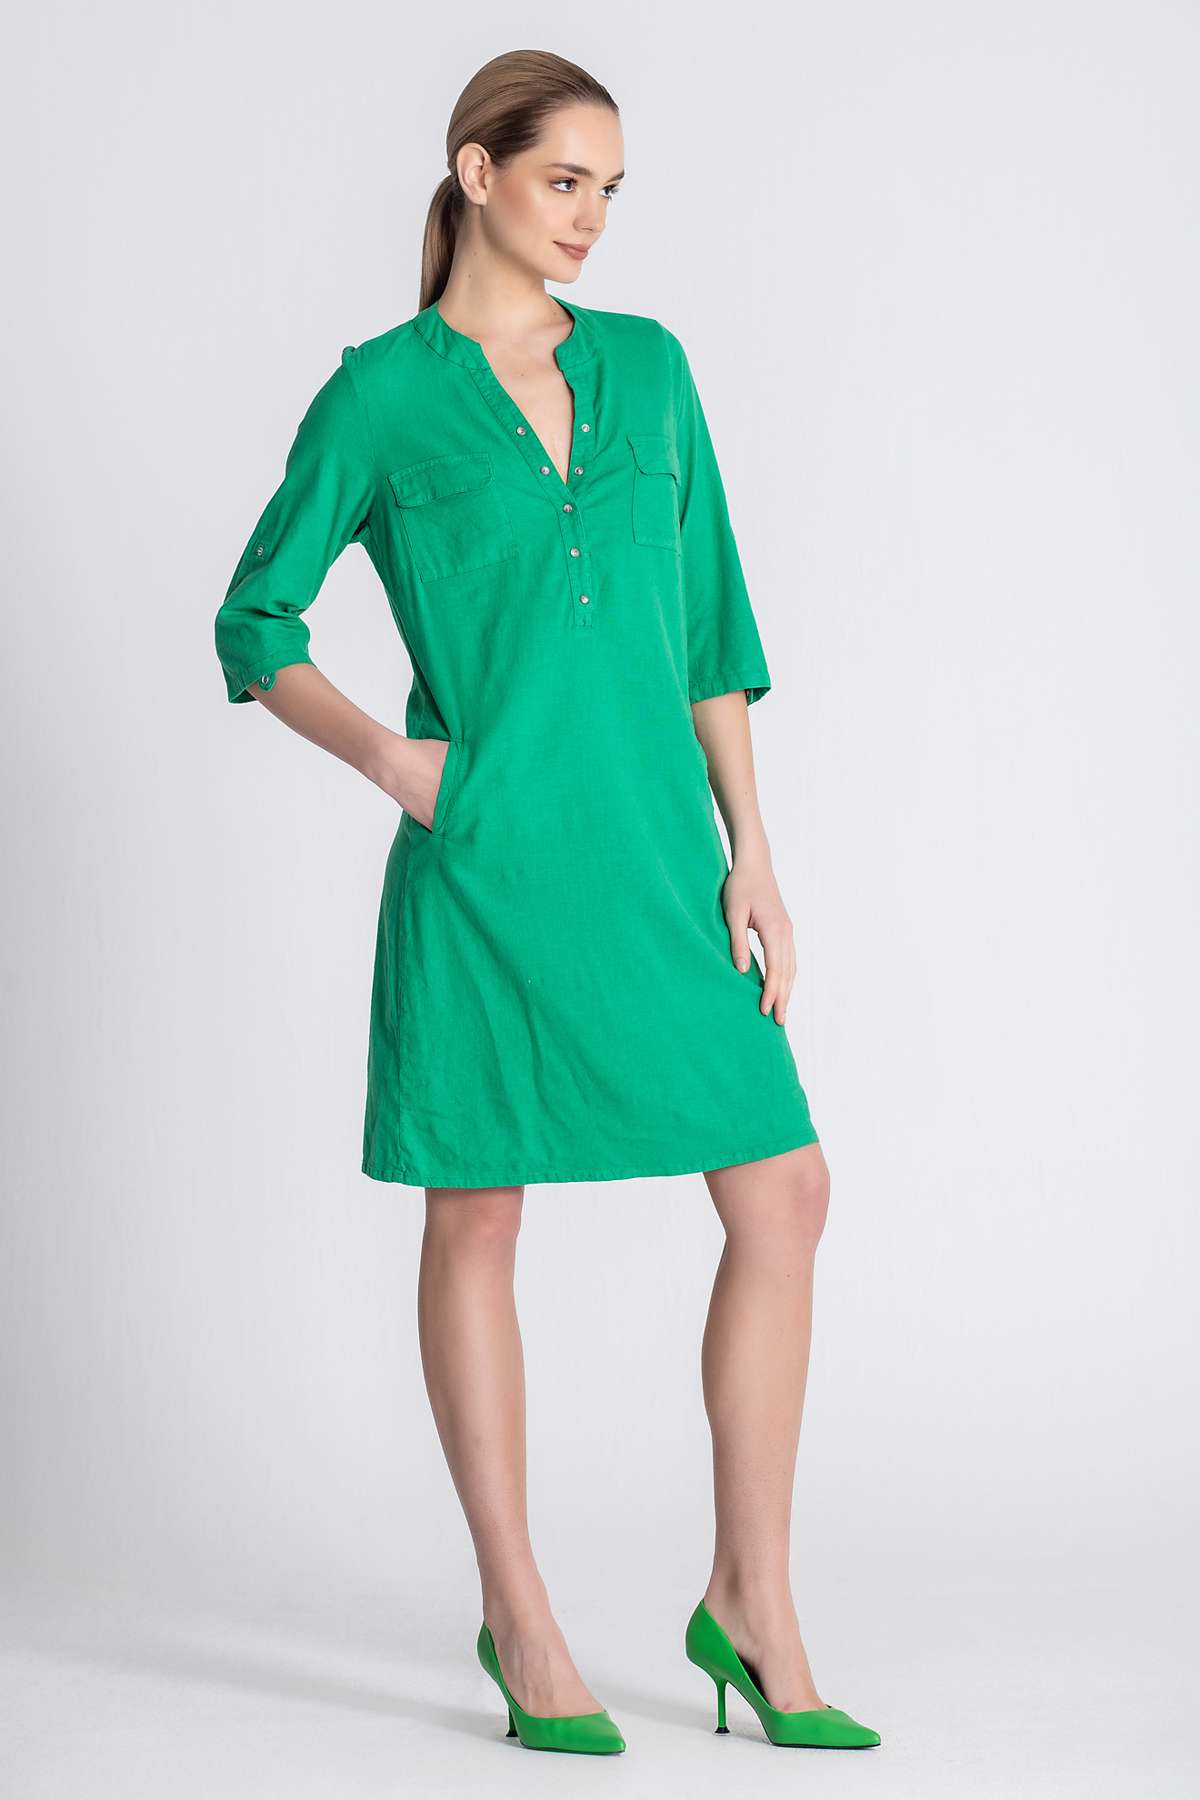 Ella Green Dress side